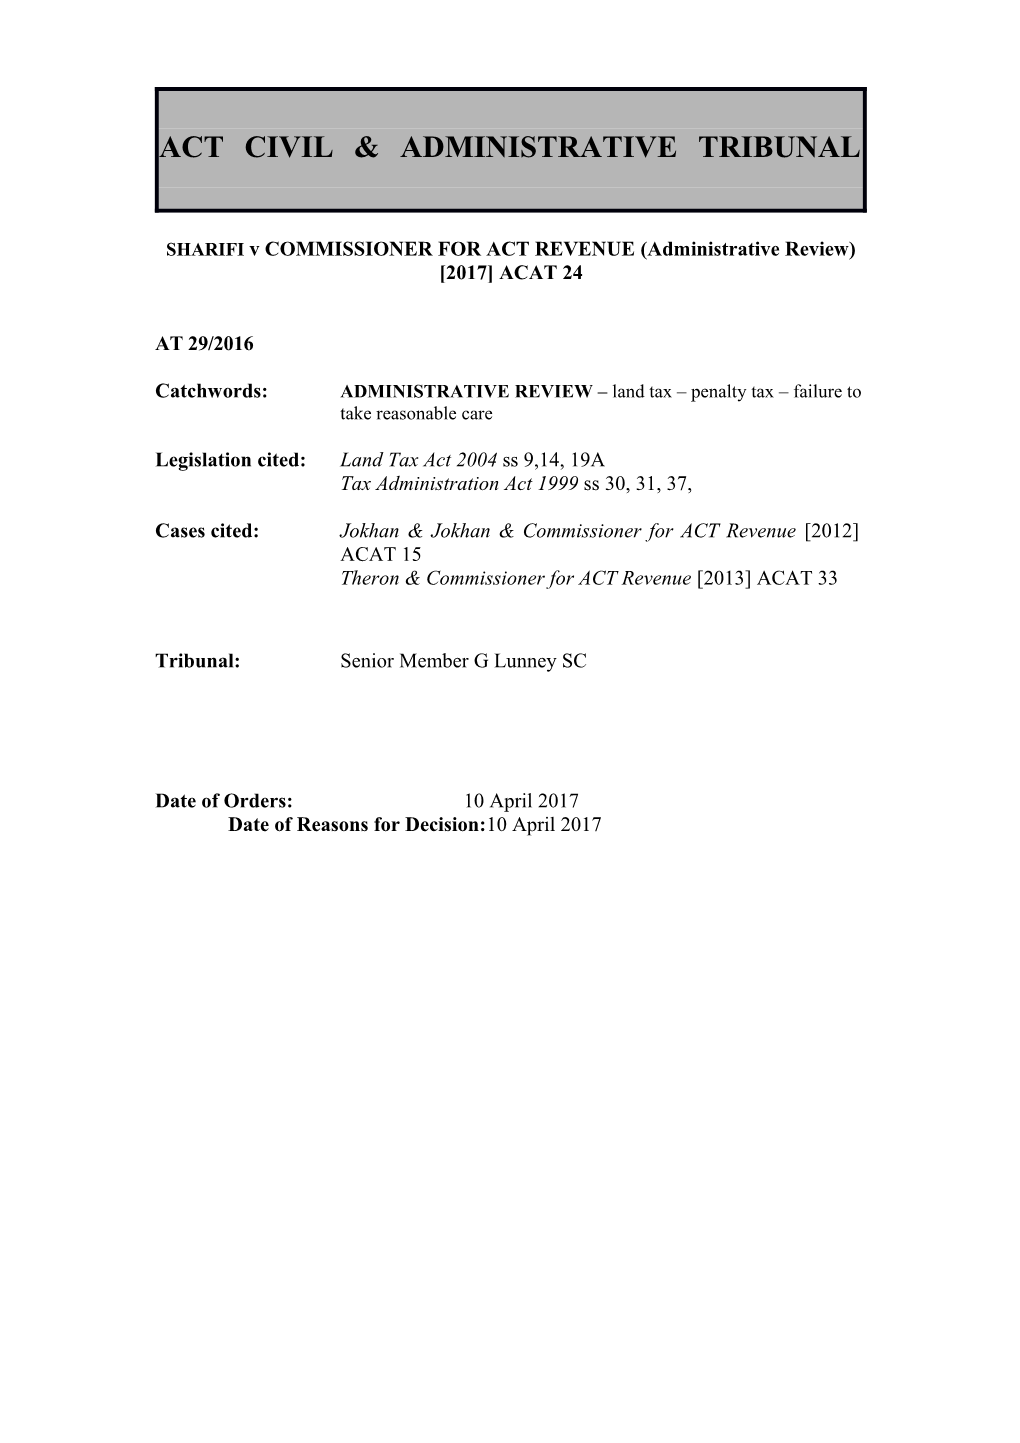 SHARIFI V COMMISSIONER for ACT REVENUE (Administrative Review) 2017 ACAT 24